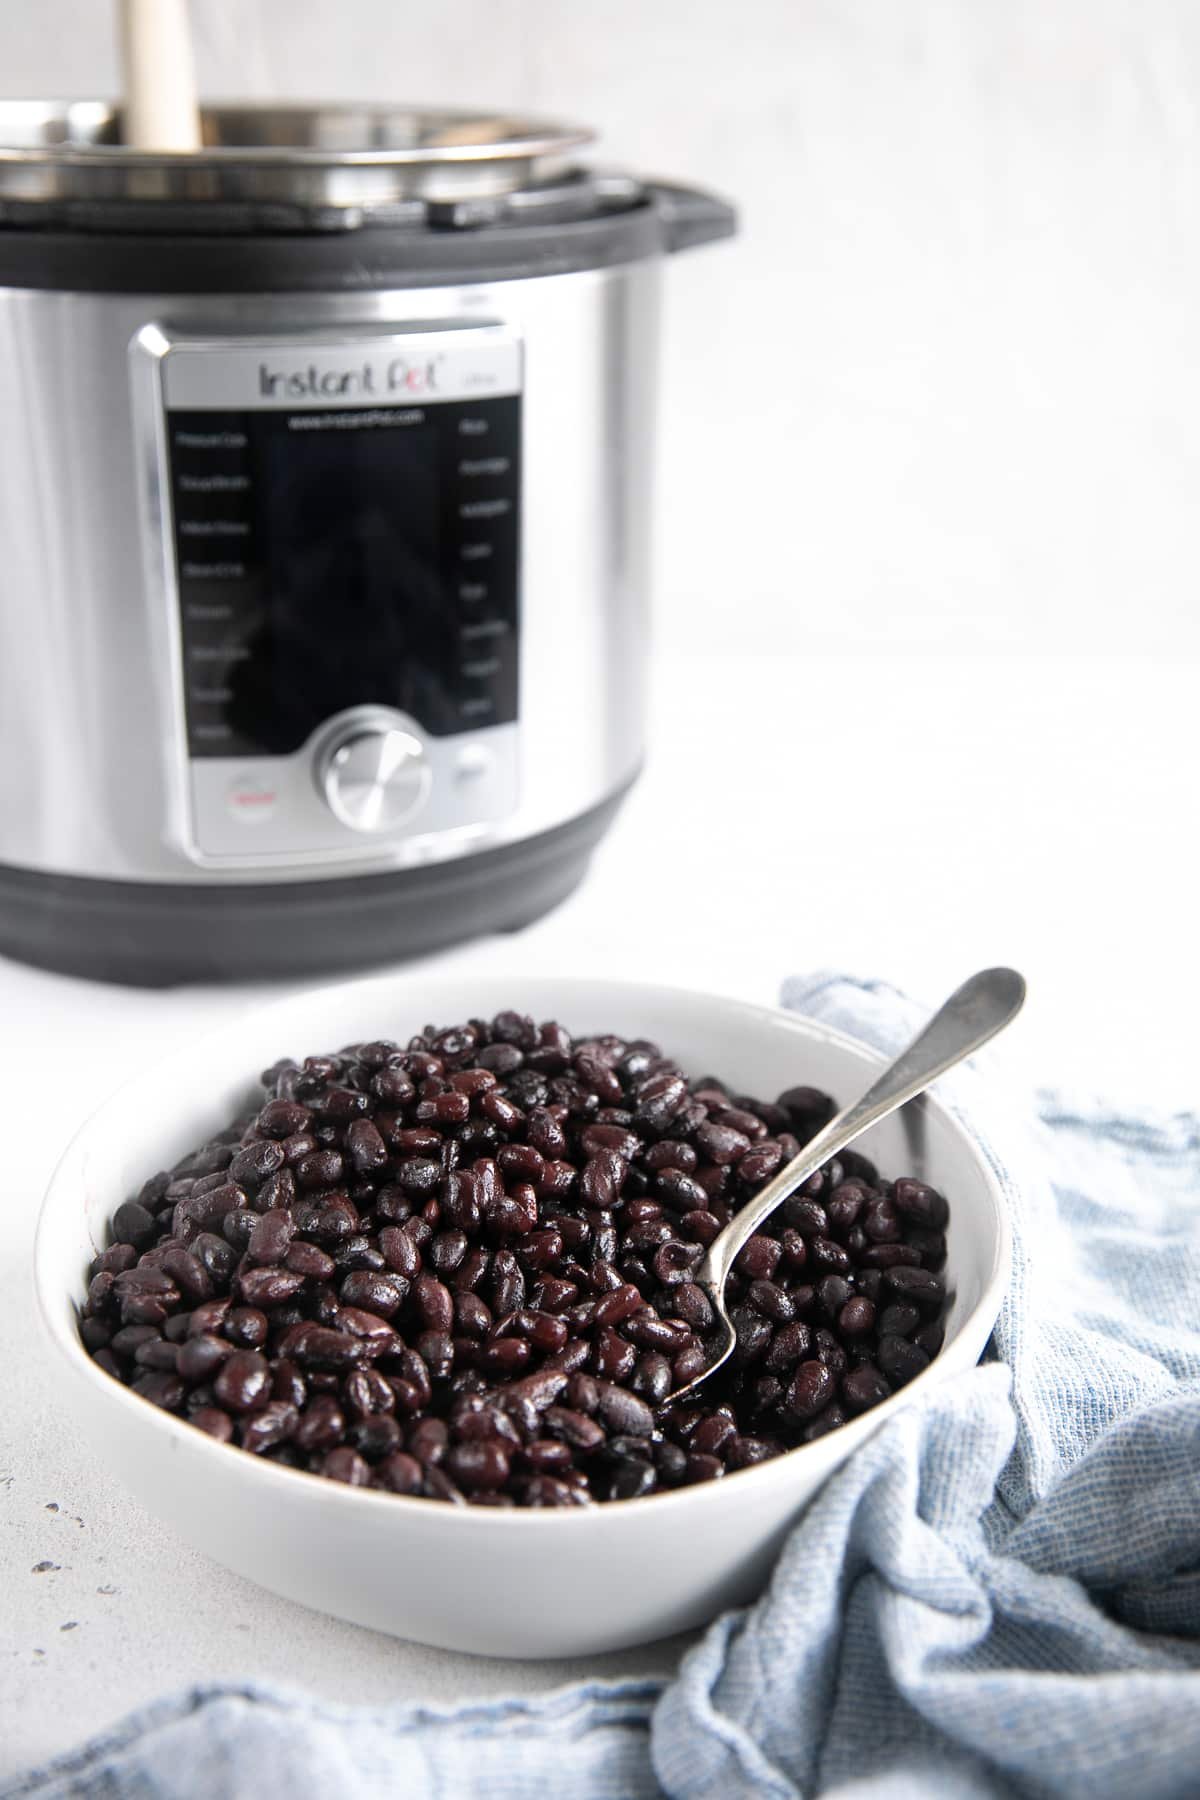 Black Beans {Crockpot or Instant Pot}